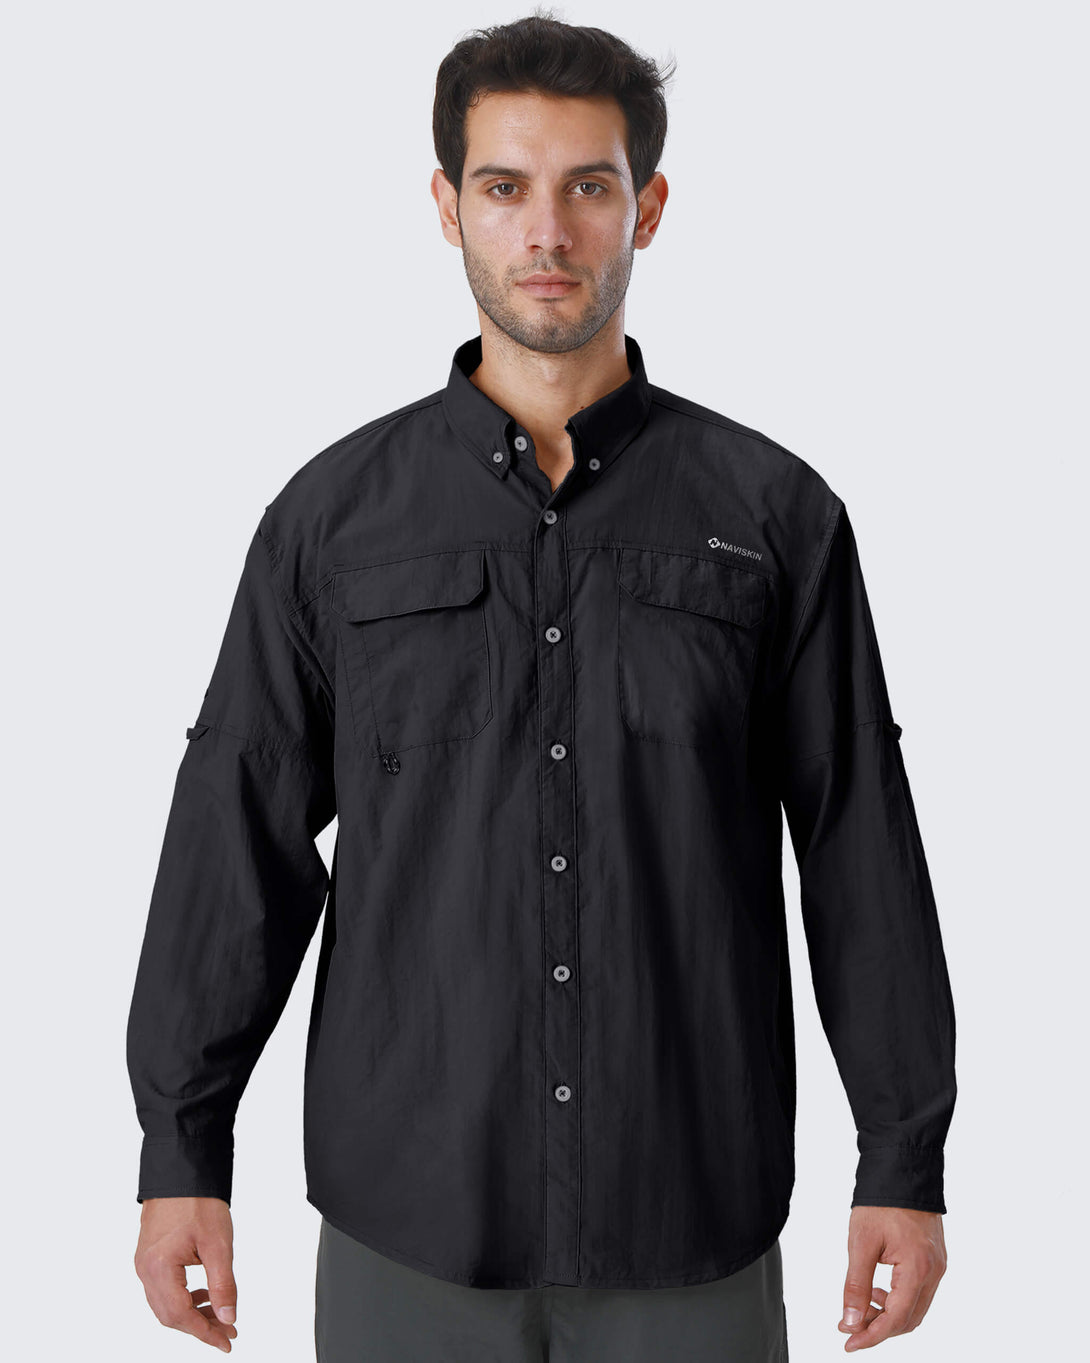 NAVISKIN Men's UPF 50+ Sun Protection Clothing Hiking Fishing Shirt Lightweight Quick Dry SPF Outdoor Long Sleeve Shirt, Black / Medium